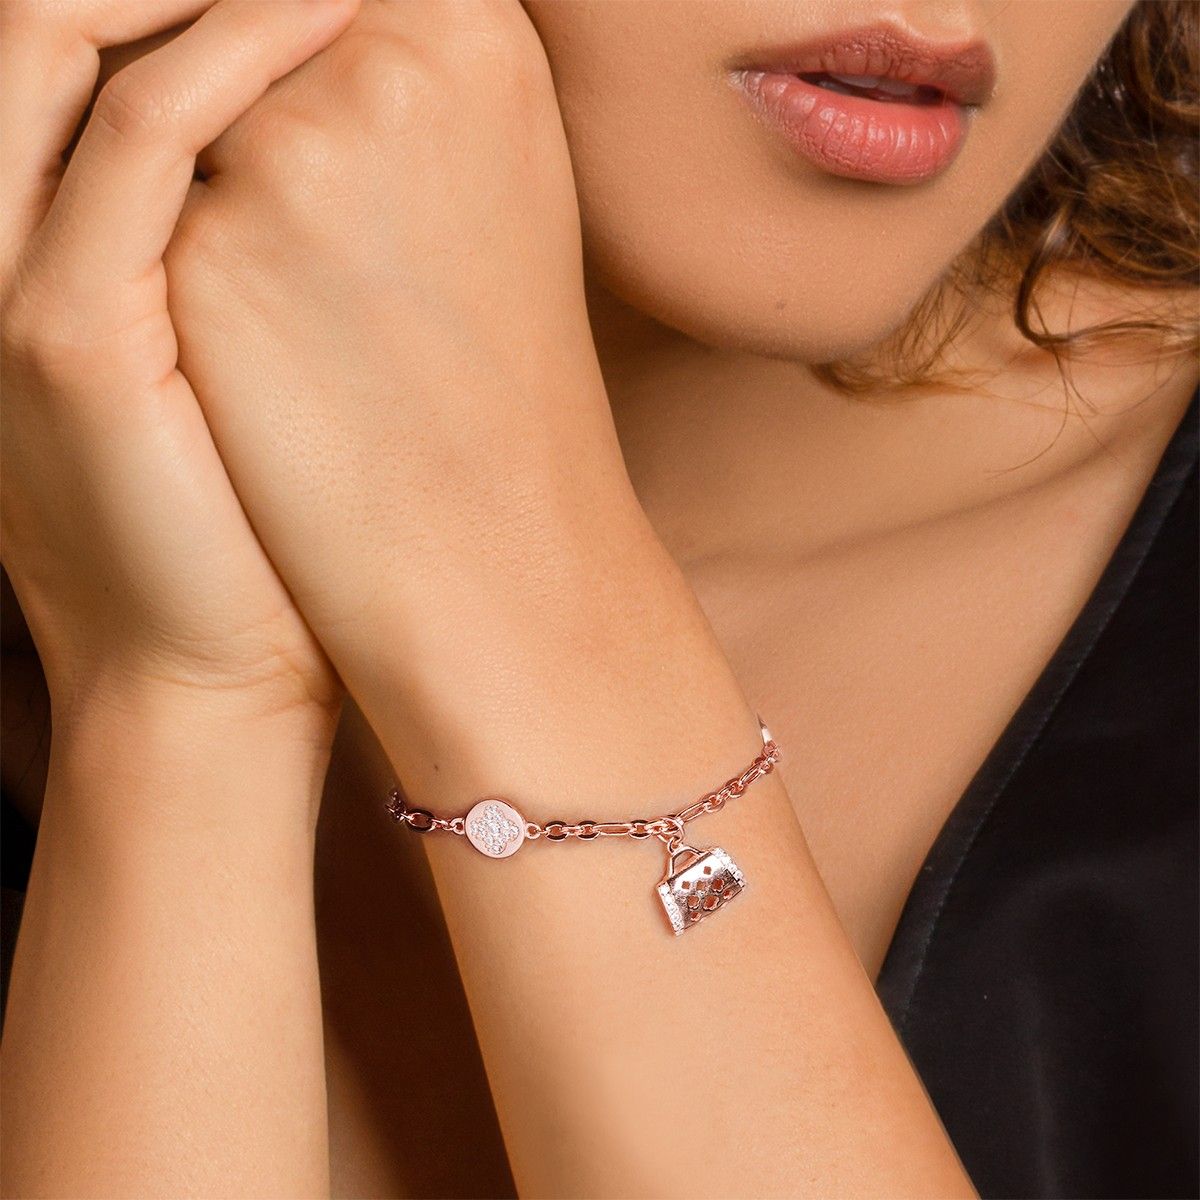 Discover more than 79 adjustable charm bracelet